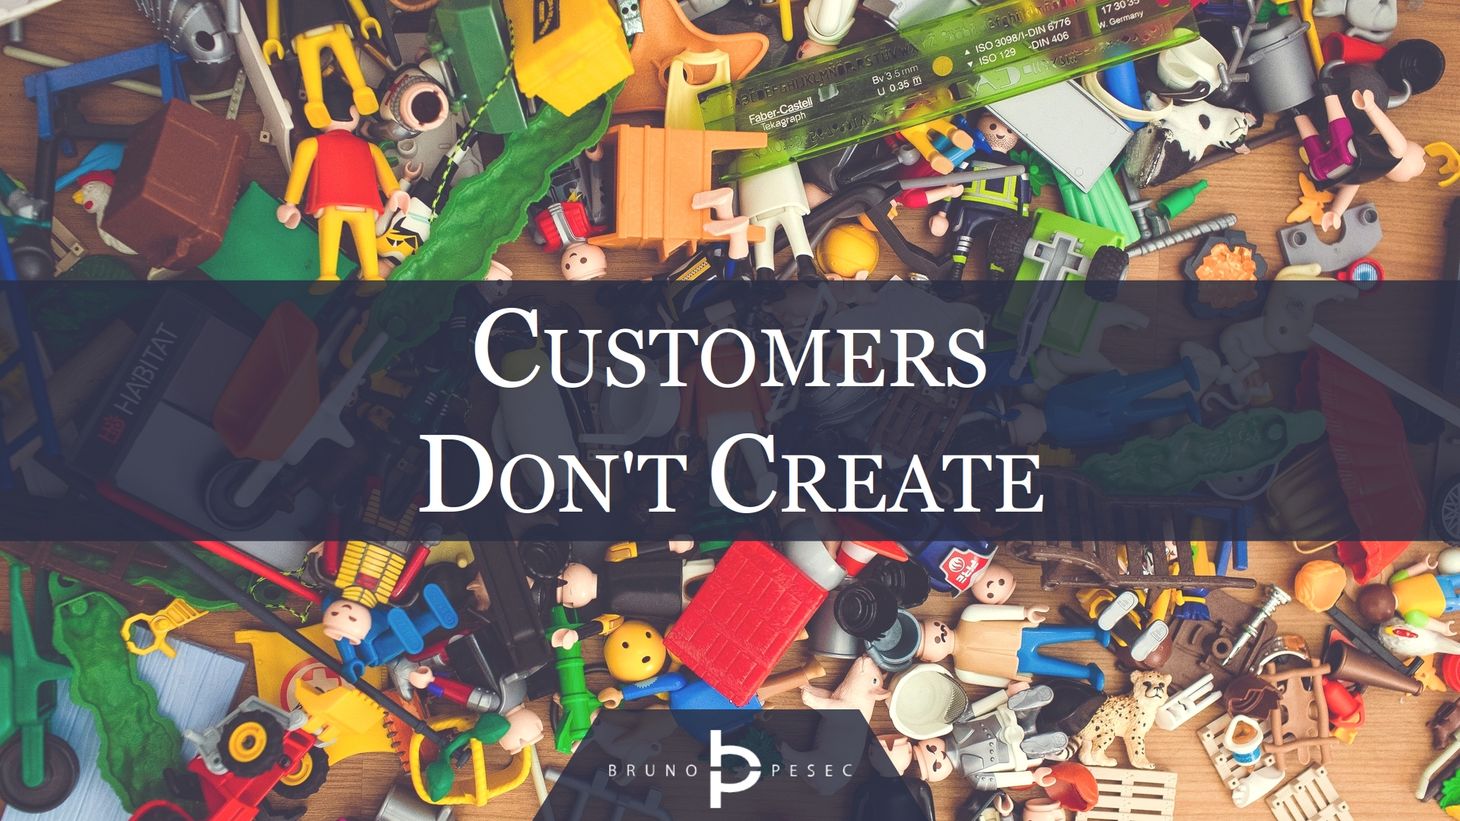 Customers don't create